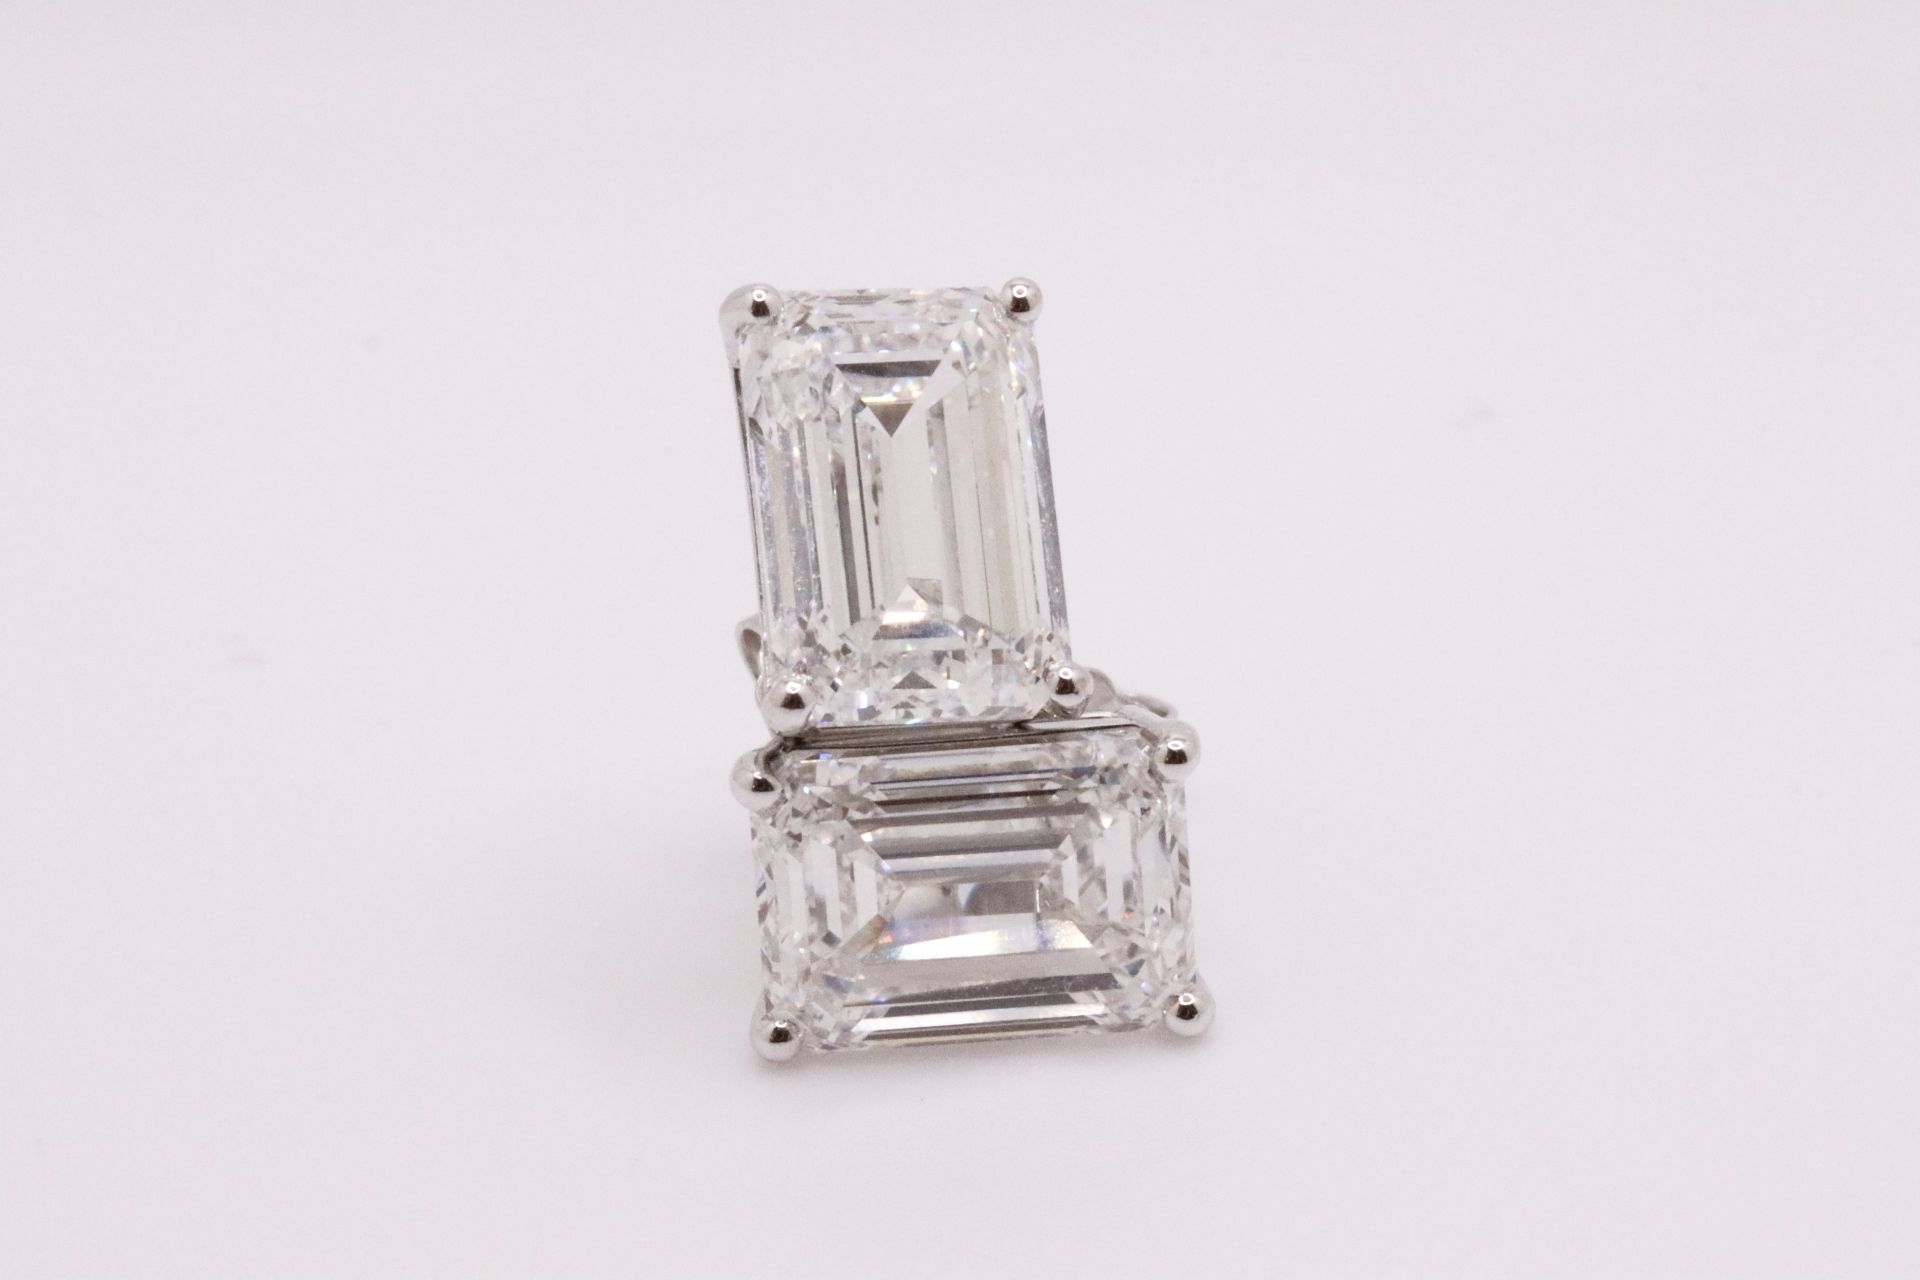 Emerald Cut 9.83 Carat 18kt White Gold Diamond Earrings E Colour VVS2 Clarity - IGI - Image 10 of 19